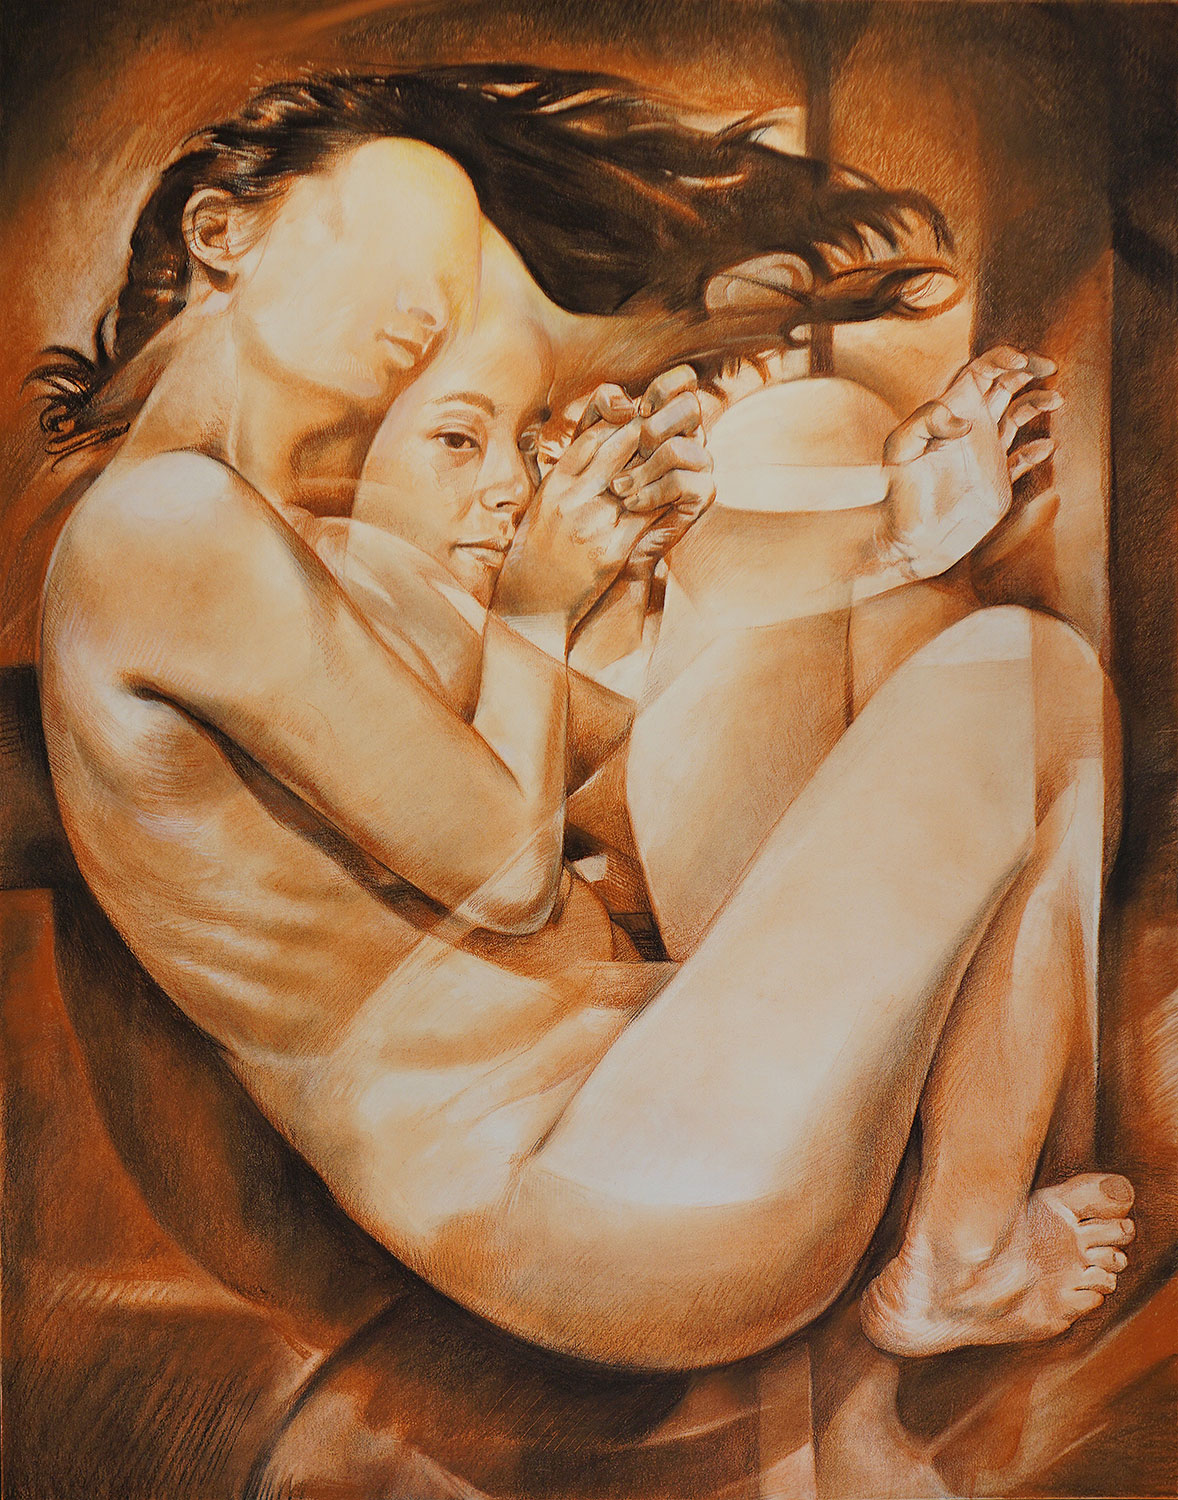 In The Nursery - Nude Figure color conte drawing